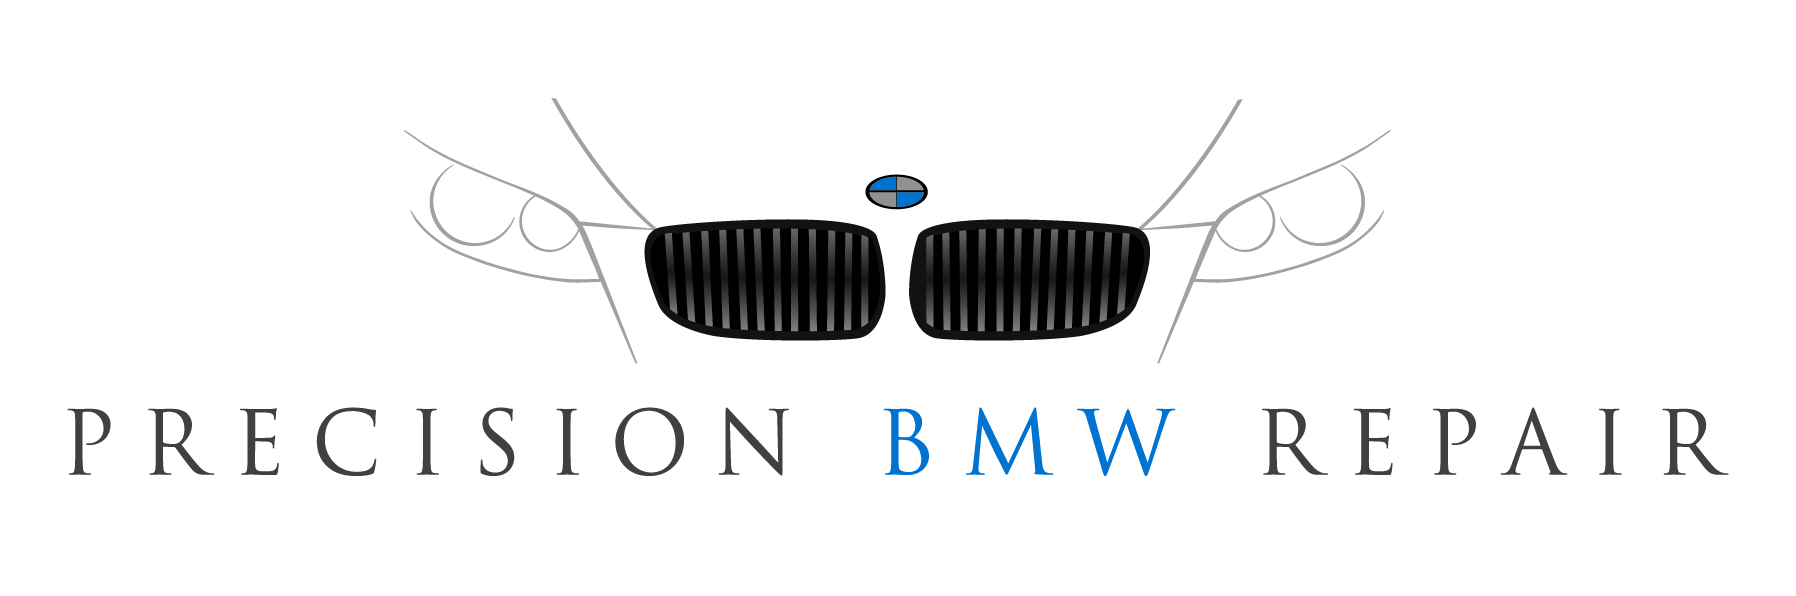 Precision BMW Repair2 Homepage